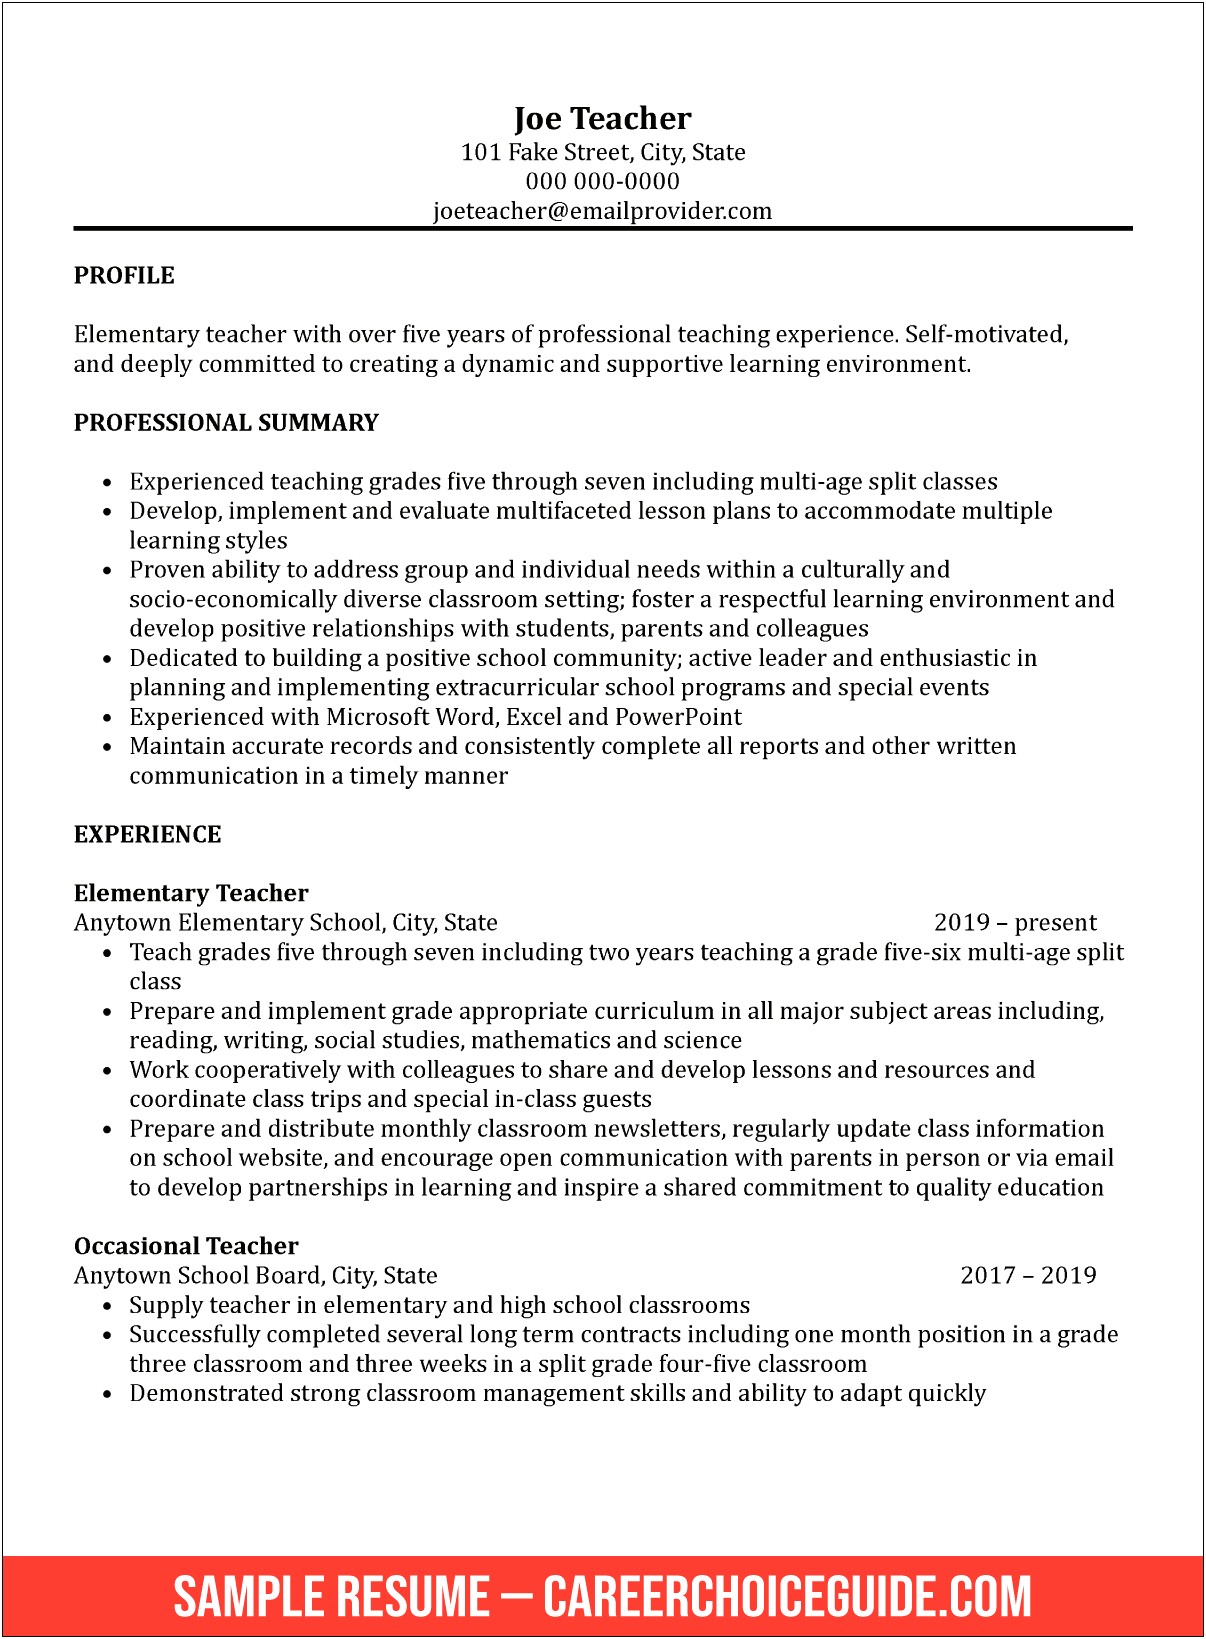 Resume For Teaching Position Boarding School